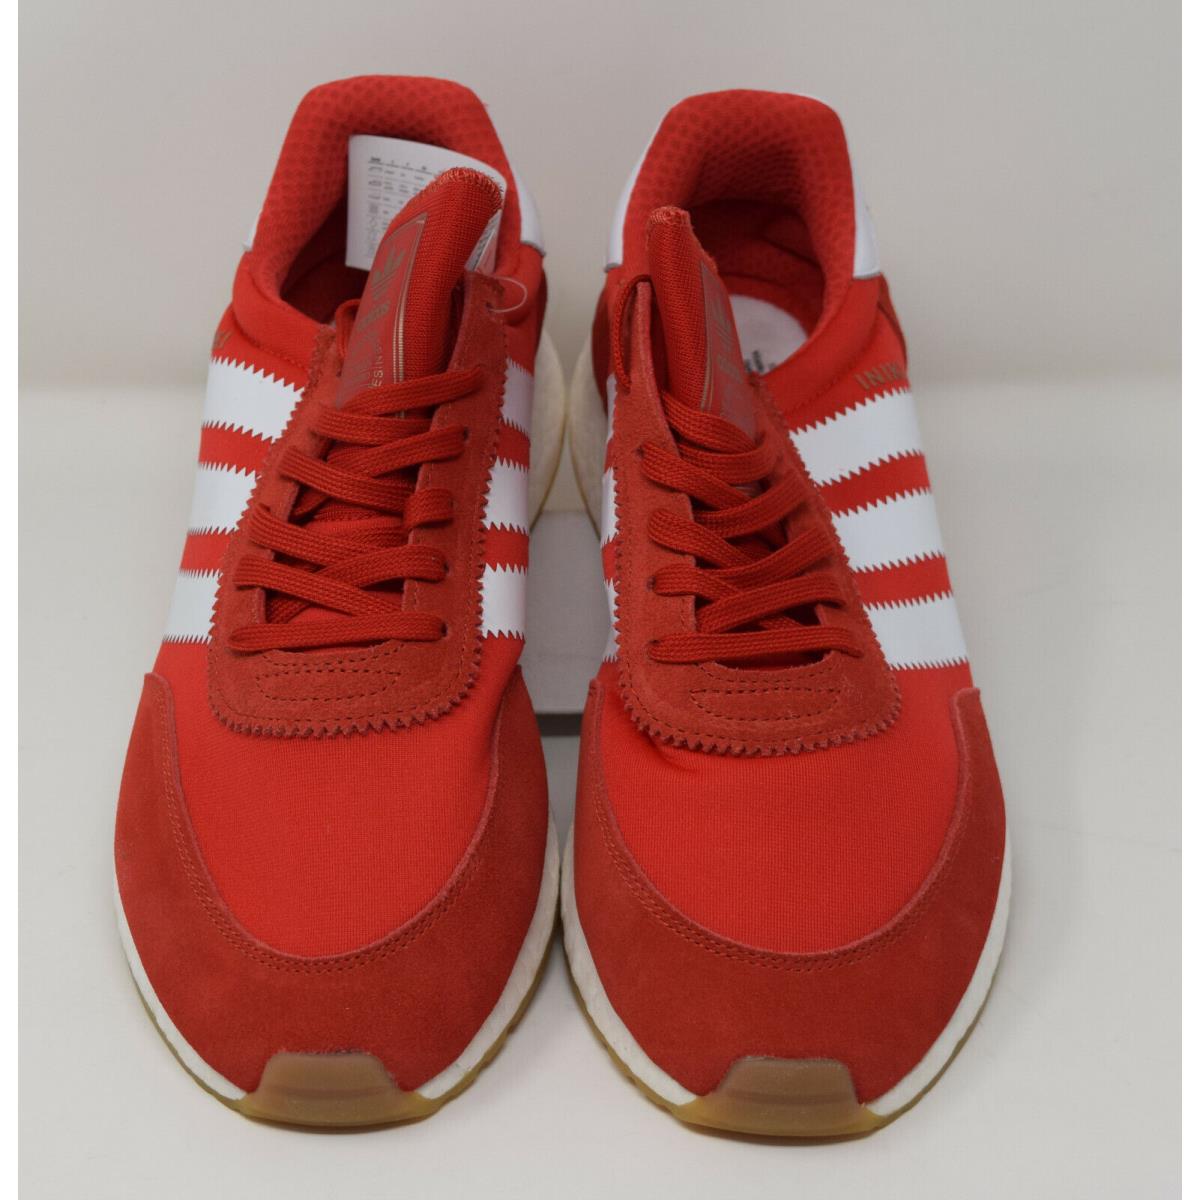 Es decir oscuro donante Adidas Iniki Runner Red White Gum Mens Shoes Sneaker 11.5 US | 692740882321  - Adidas shoes Iniki Runner - Red | SporTipTop